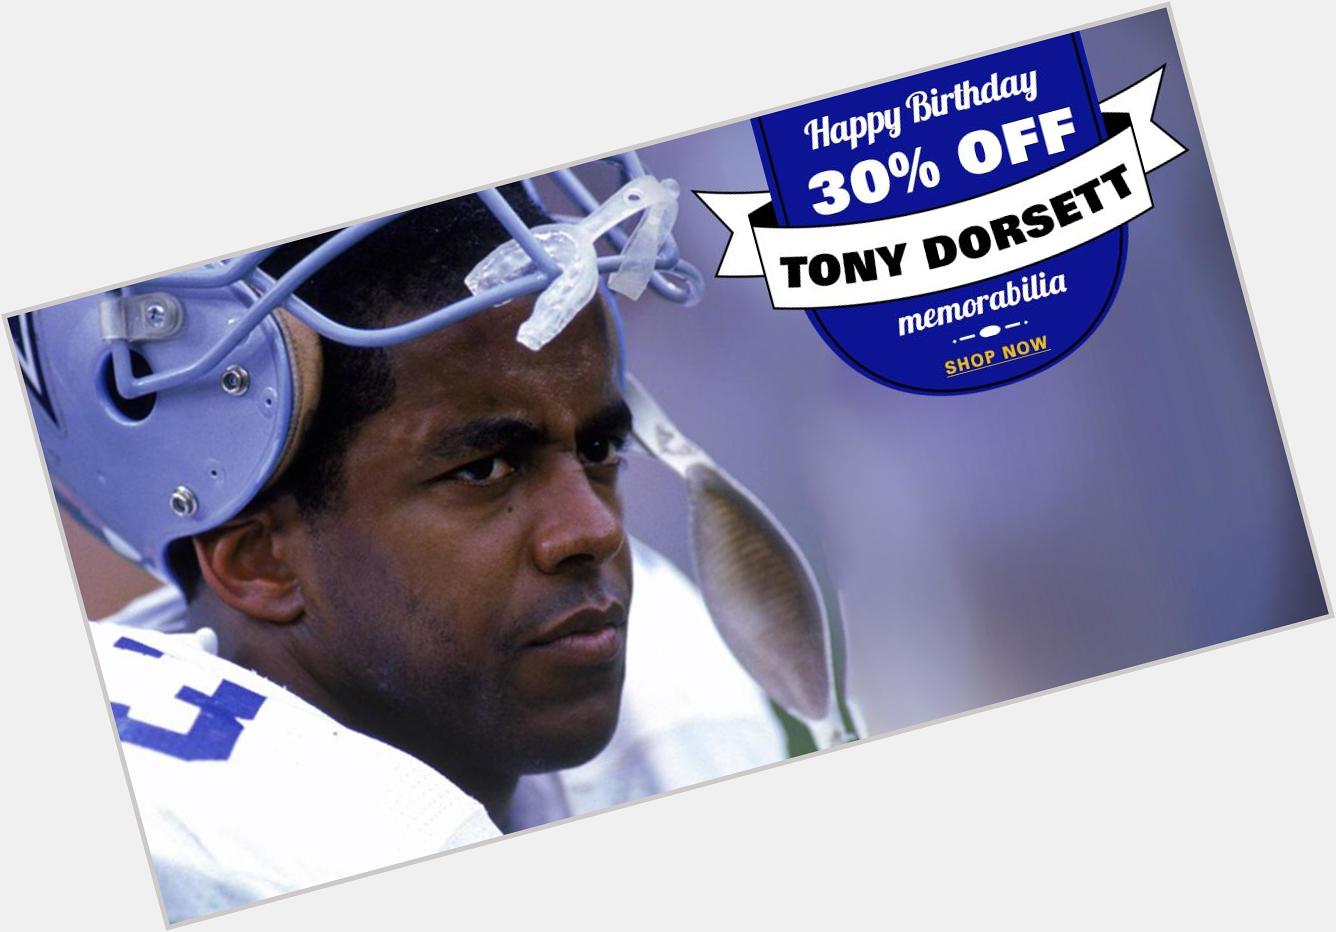 Happy Birthday to Tony Dorsett! Take 30% off all Dorsett Memorabilia! 